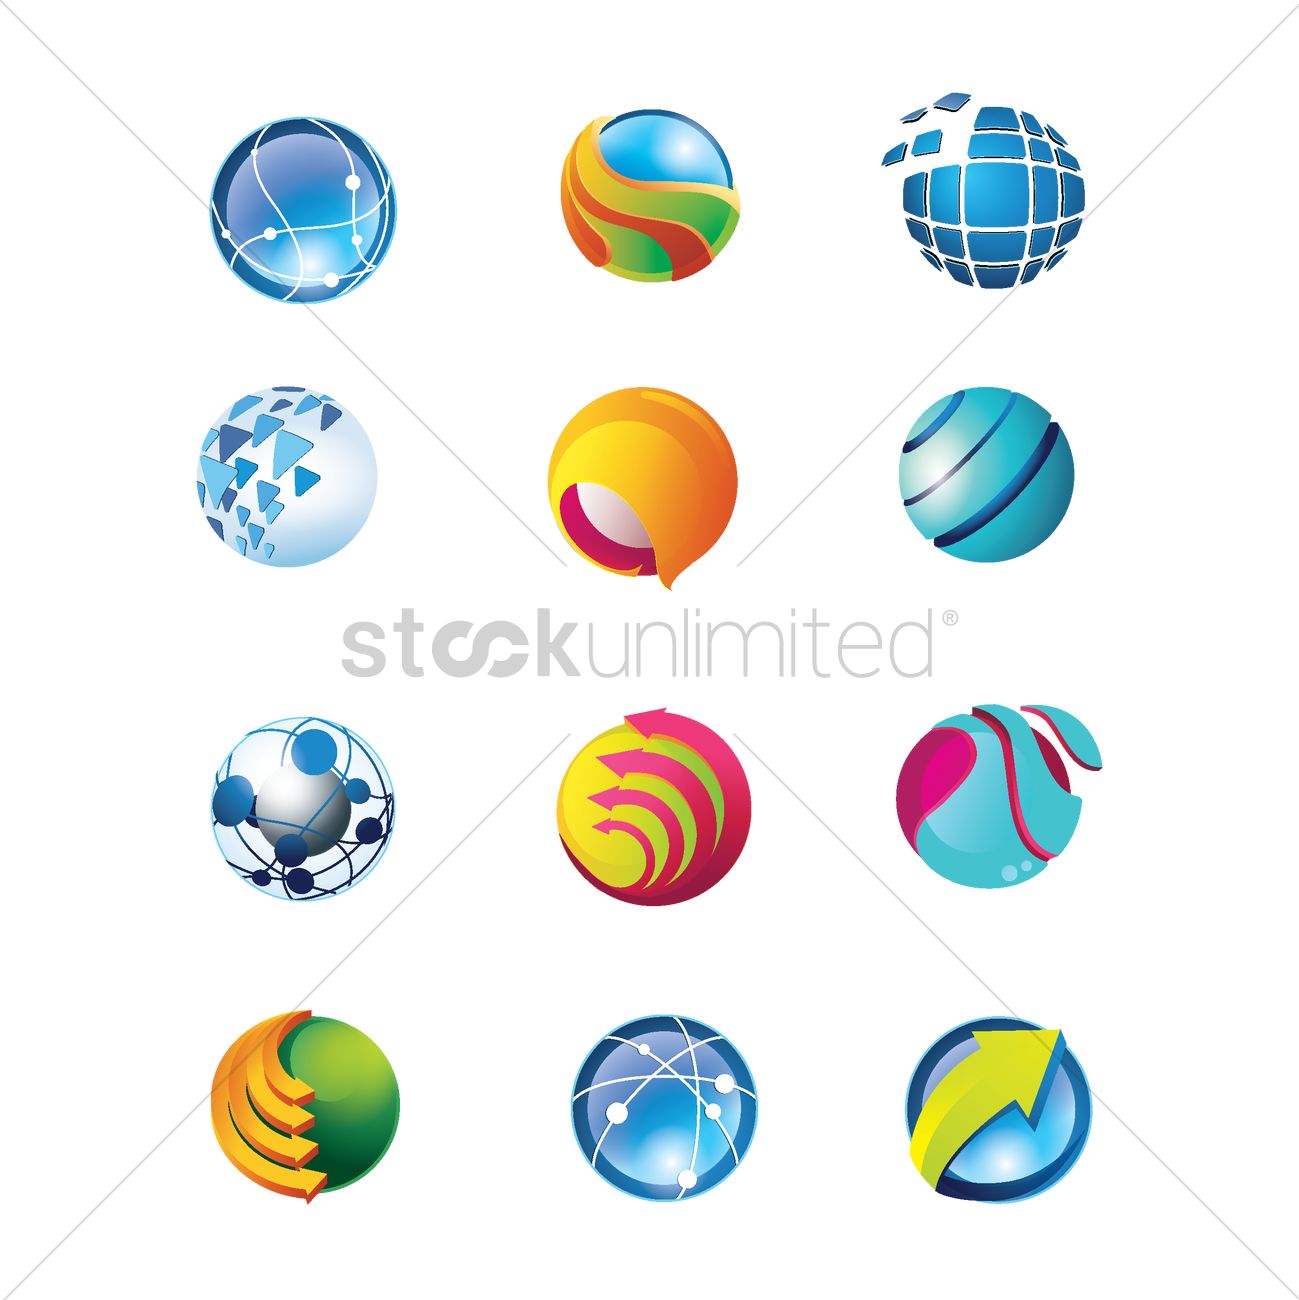 Spherical logo element design collection Vector Image.